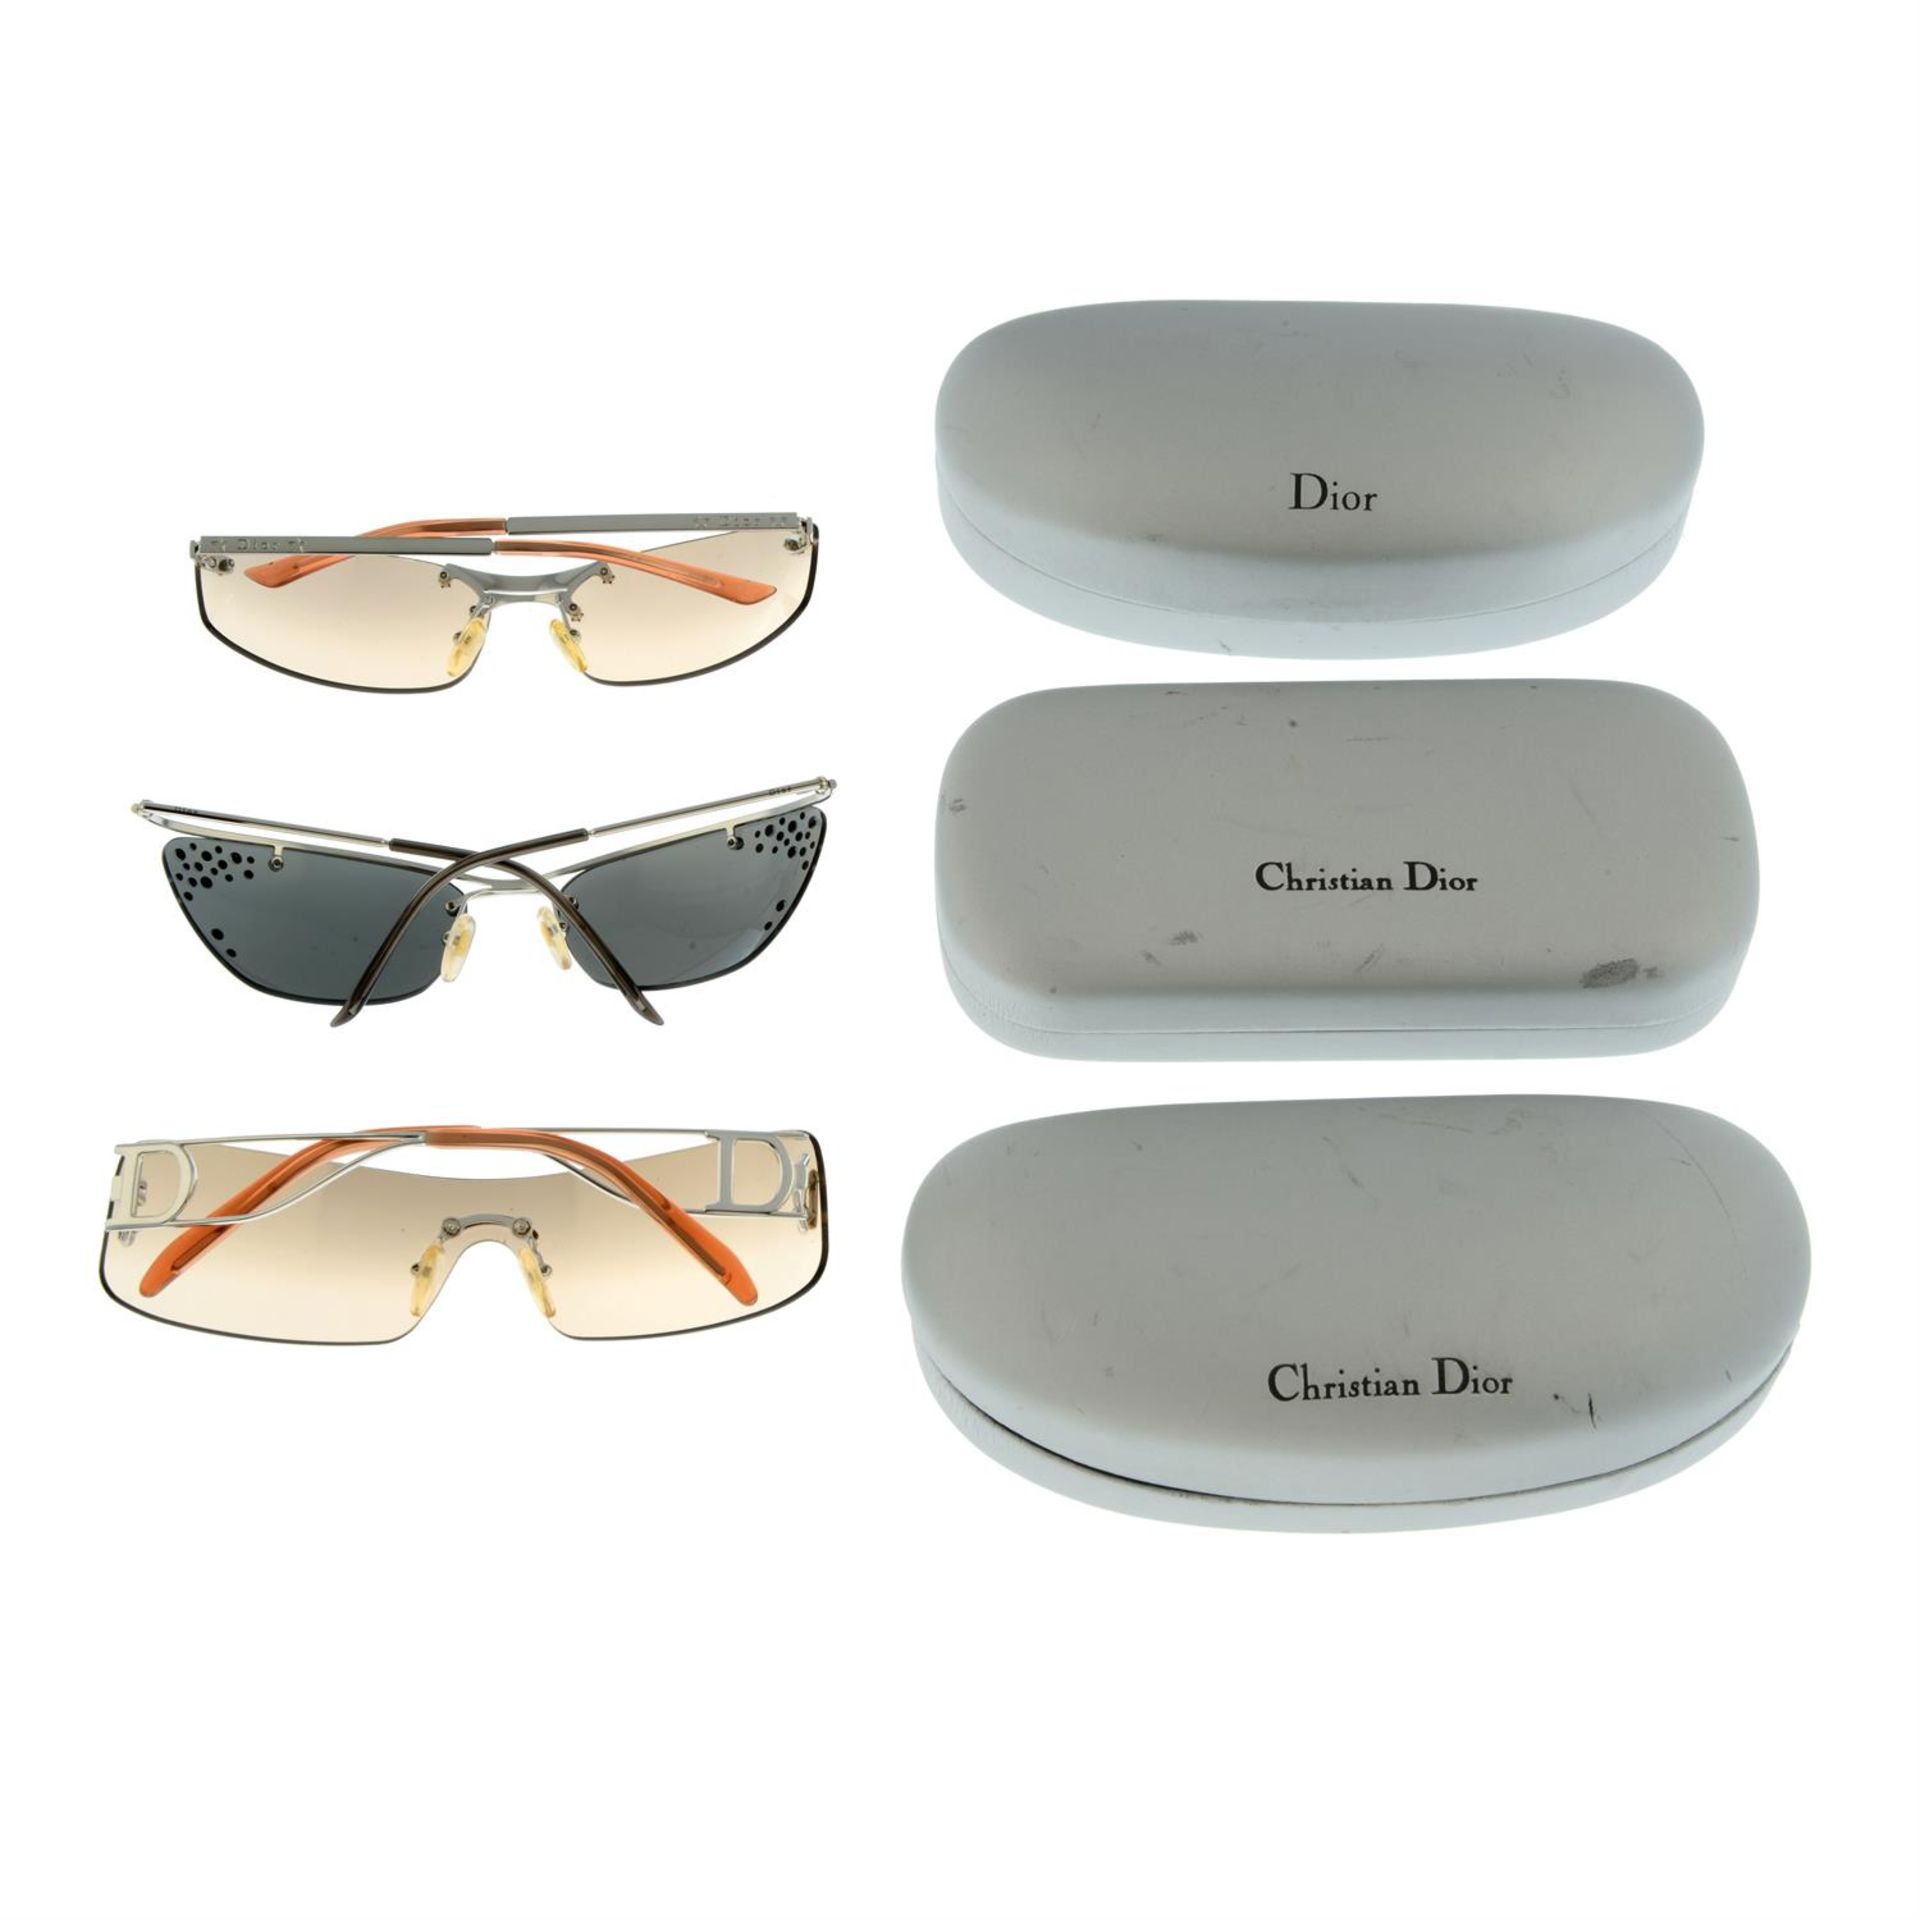 CHRISTIAN DIOR - three pairs of sunglasses. - Image 2 of 2